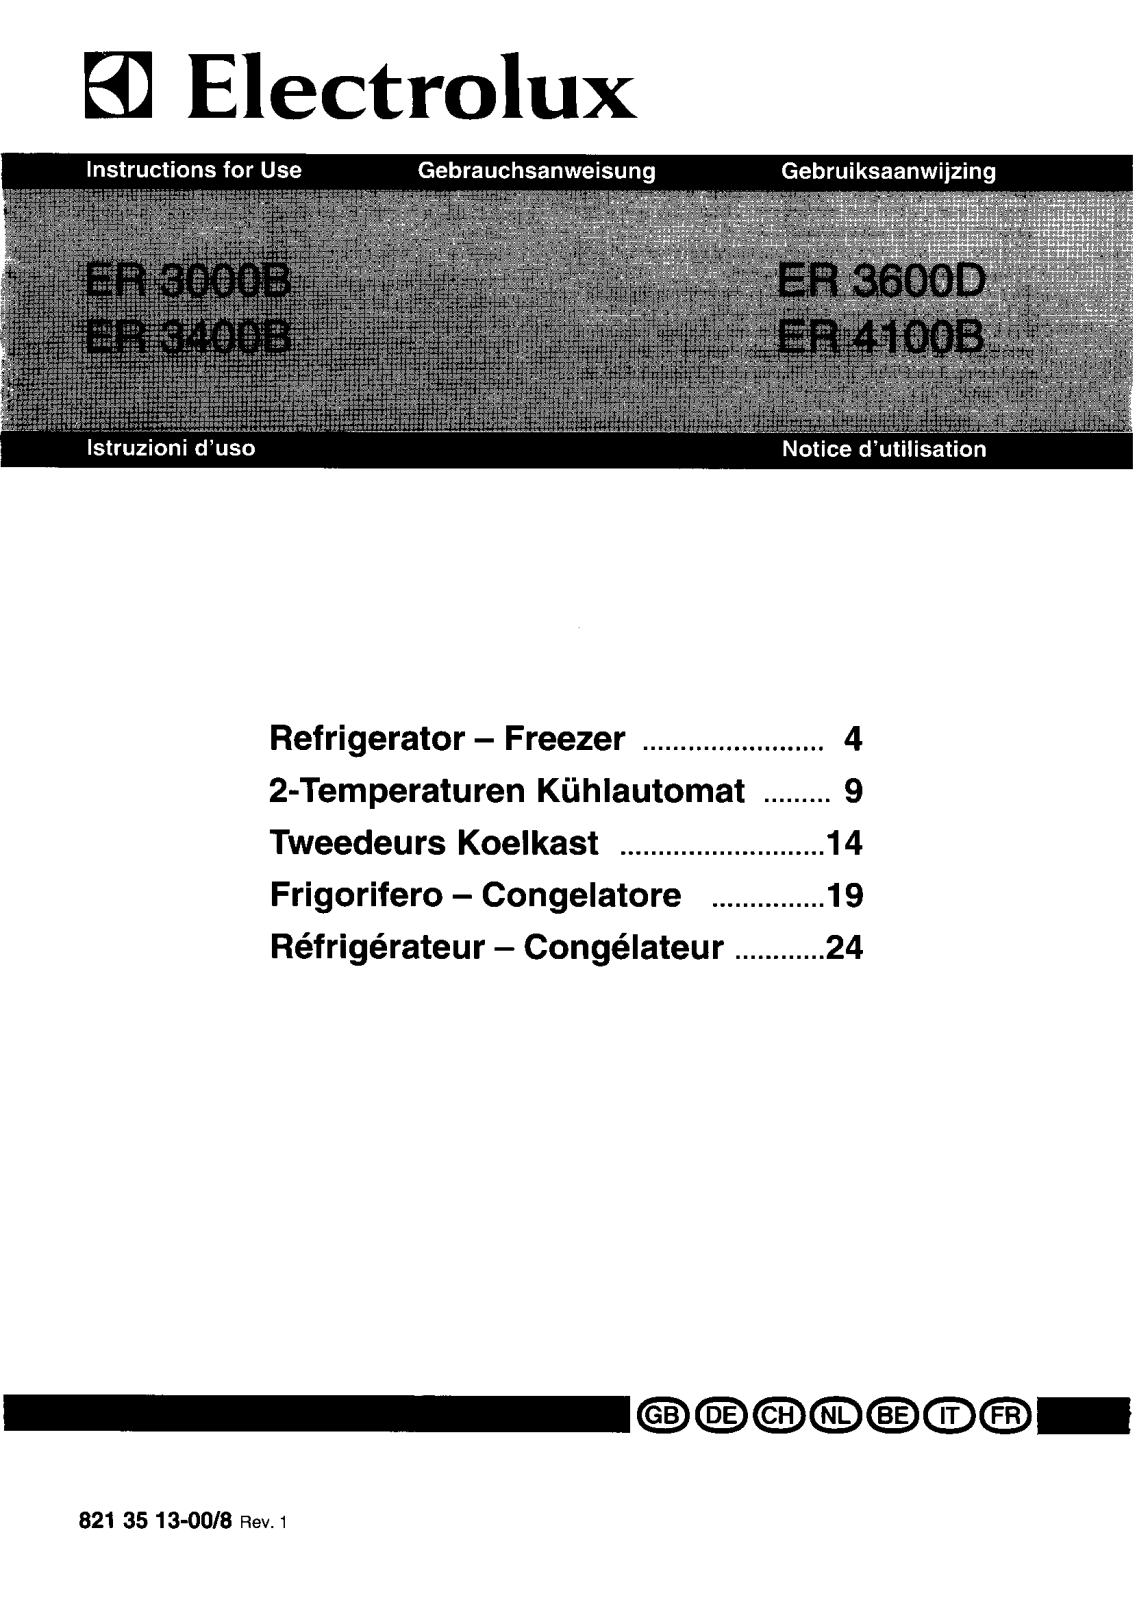 electrolux ER3000B, ER3600D, ER3600B, ER4100B User Manual